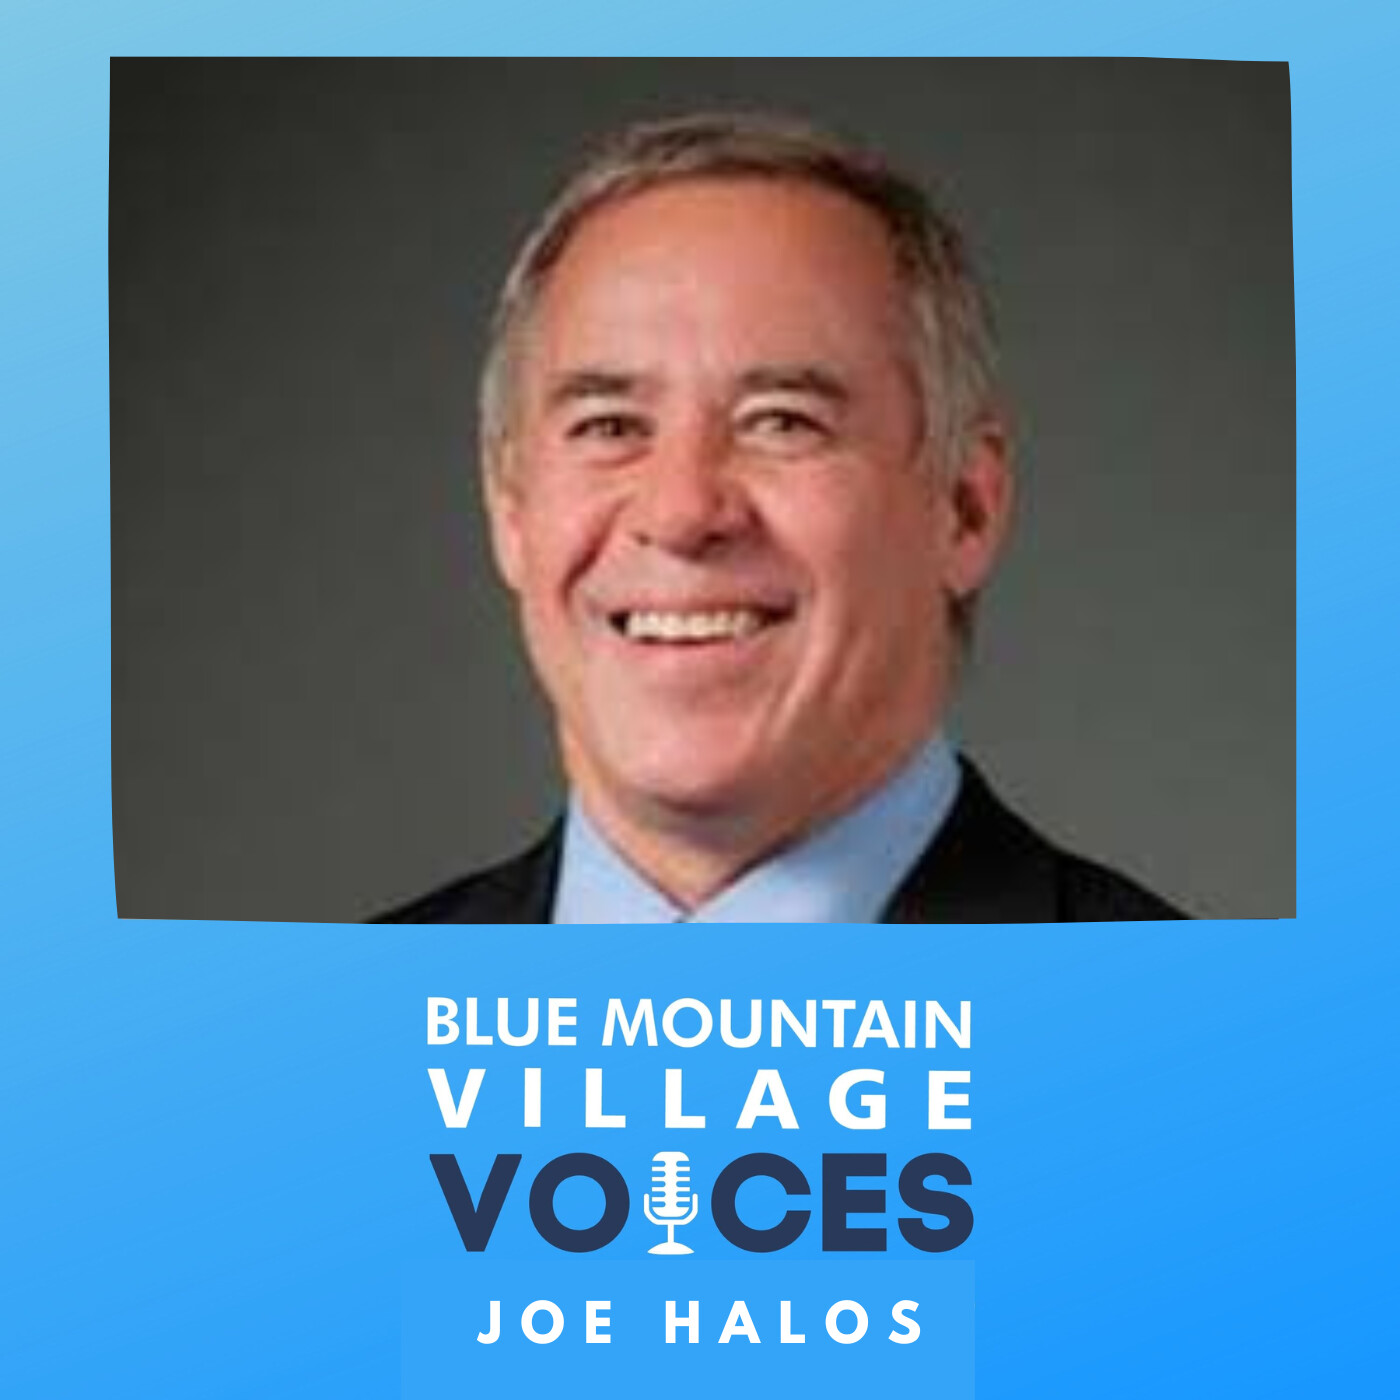 Joe Halos: Town Councillor and Mayoral Candidate